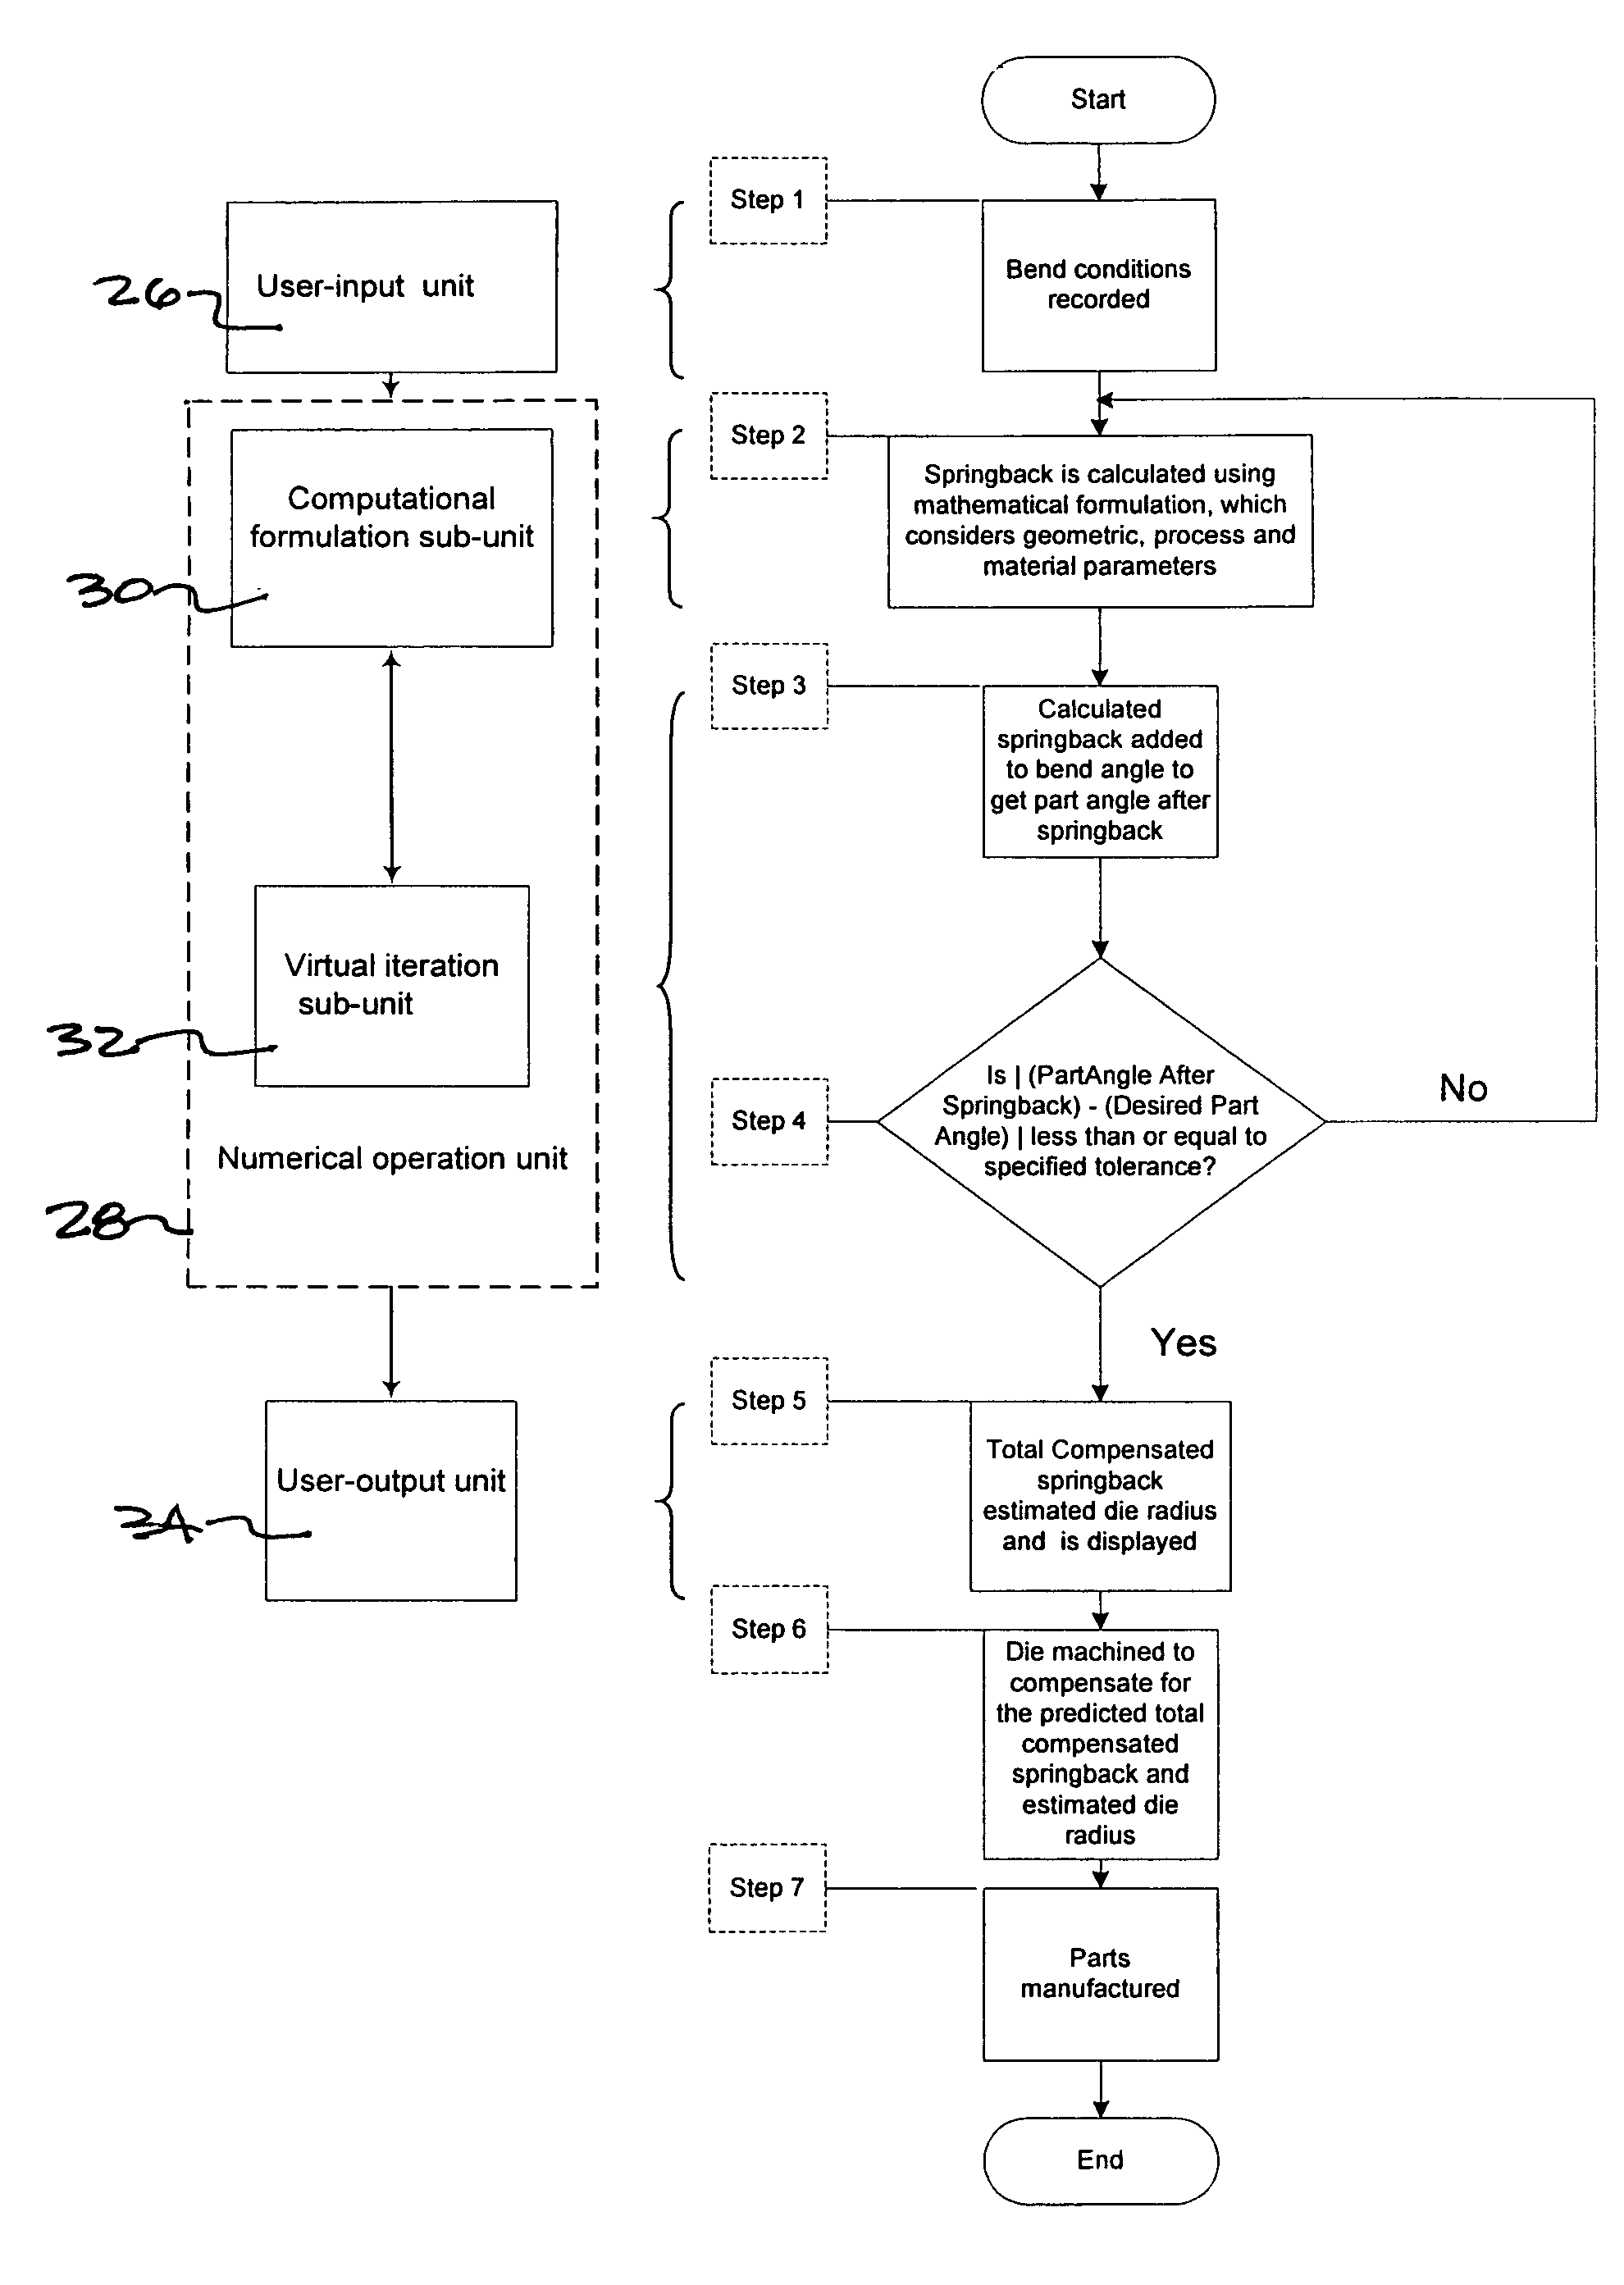 Method of predicting springback in hydroforming